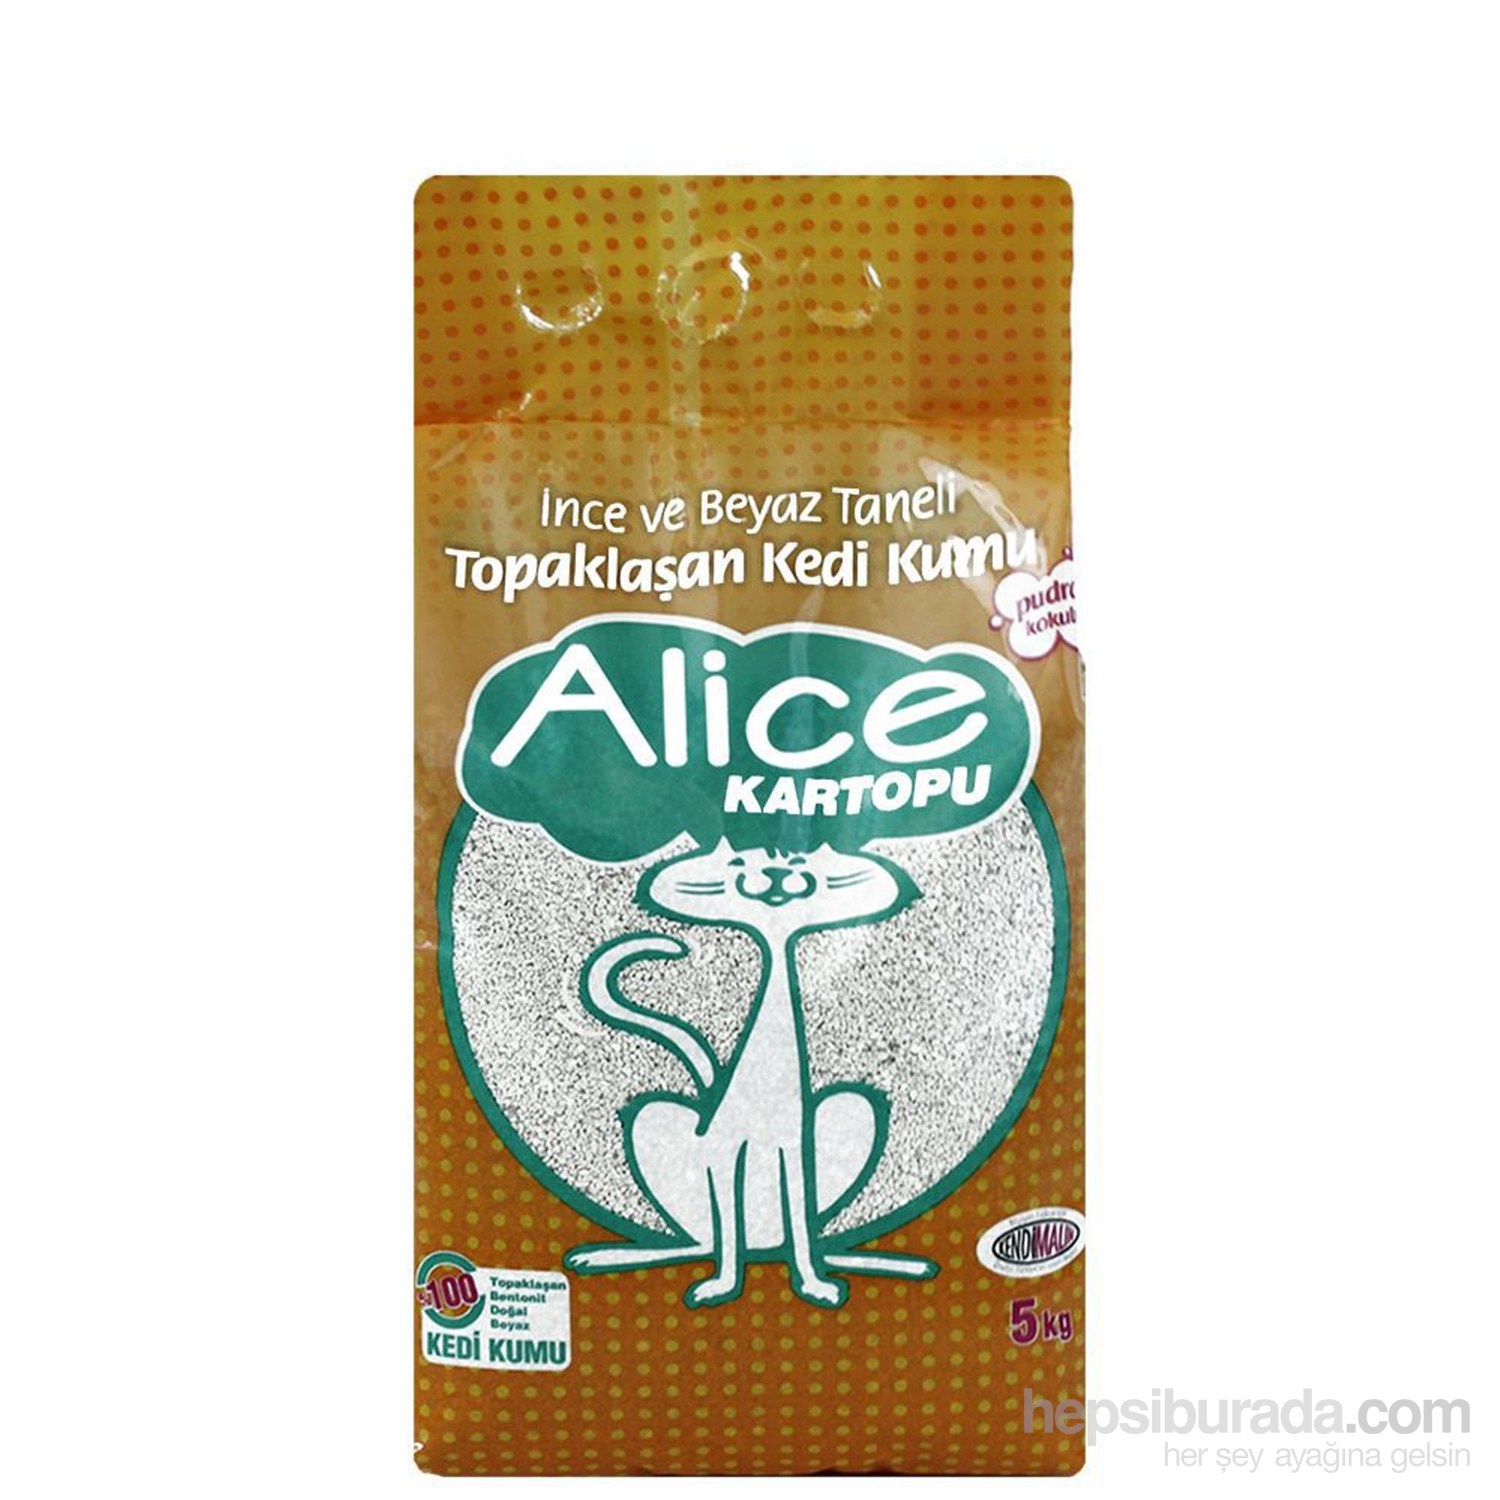 Alice Kartopu Topaklaşan Kedi Kumu Parfümlü 5 kg